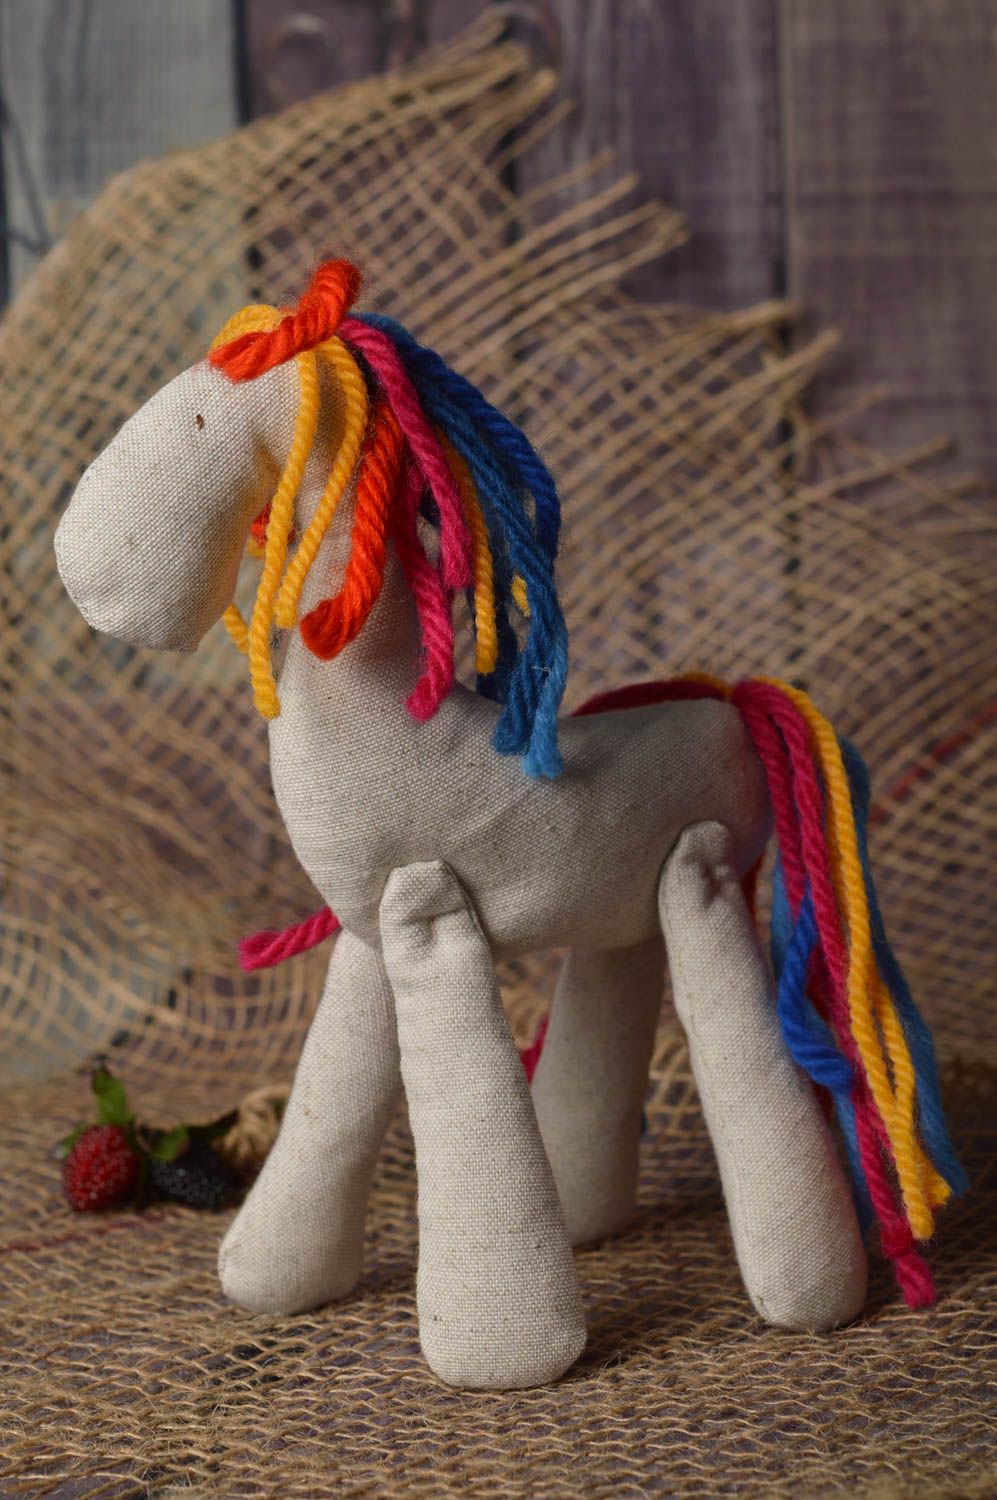 Handmade stuffed toy horse toy soft cute toy for children nursery decor ideas photo 1